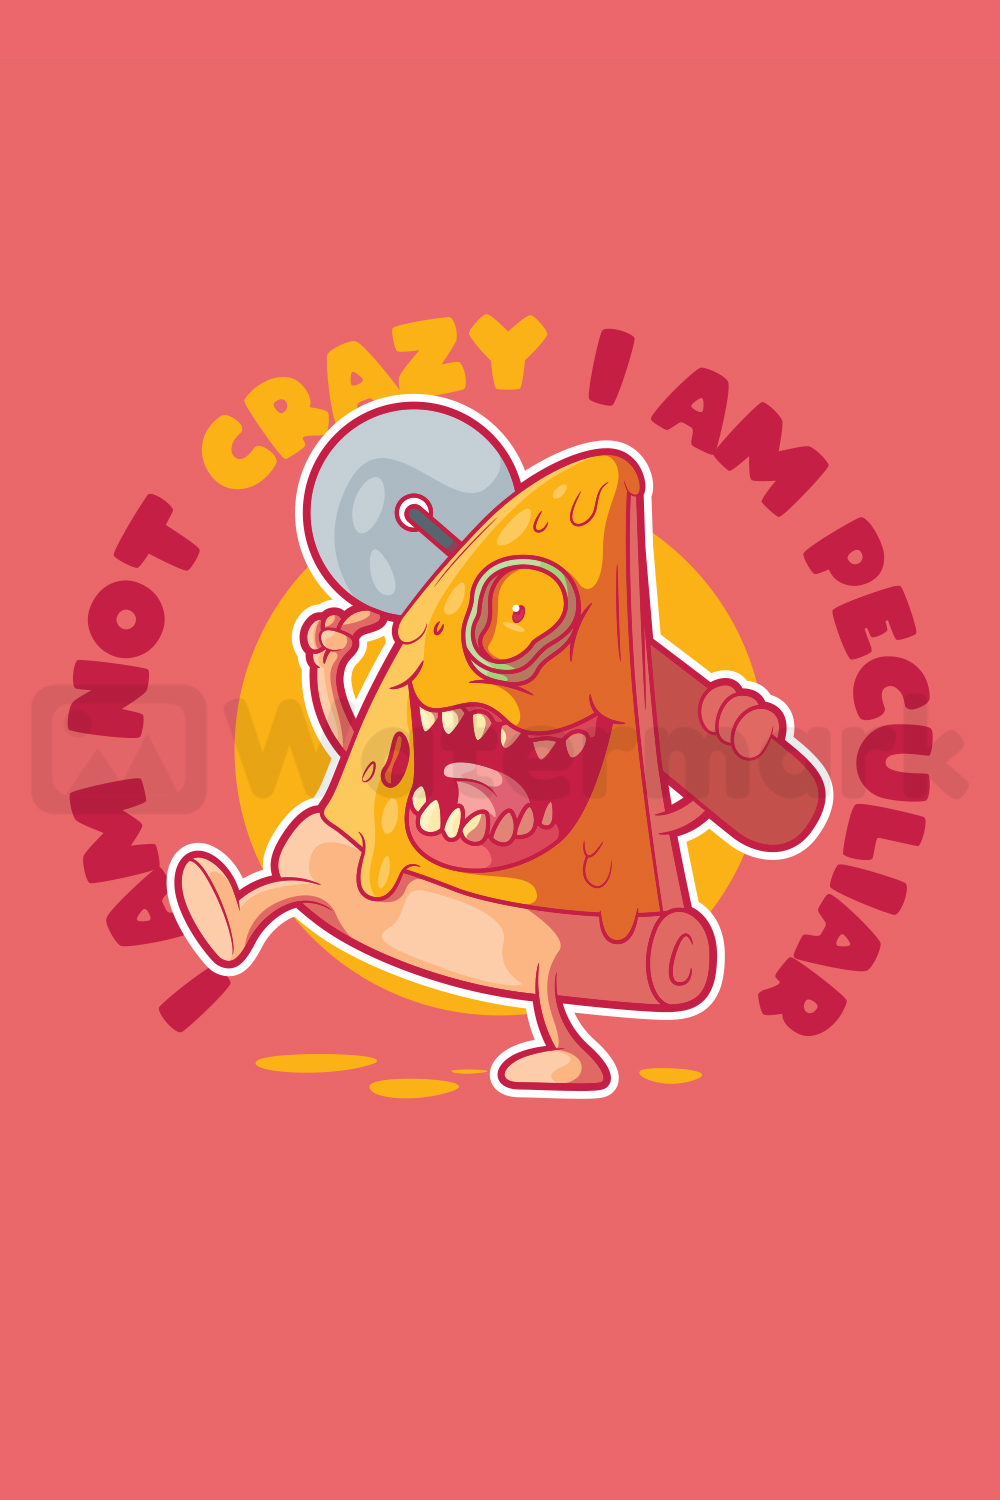 Crazy Pizza! pinterest preview image.